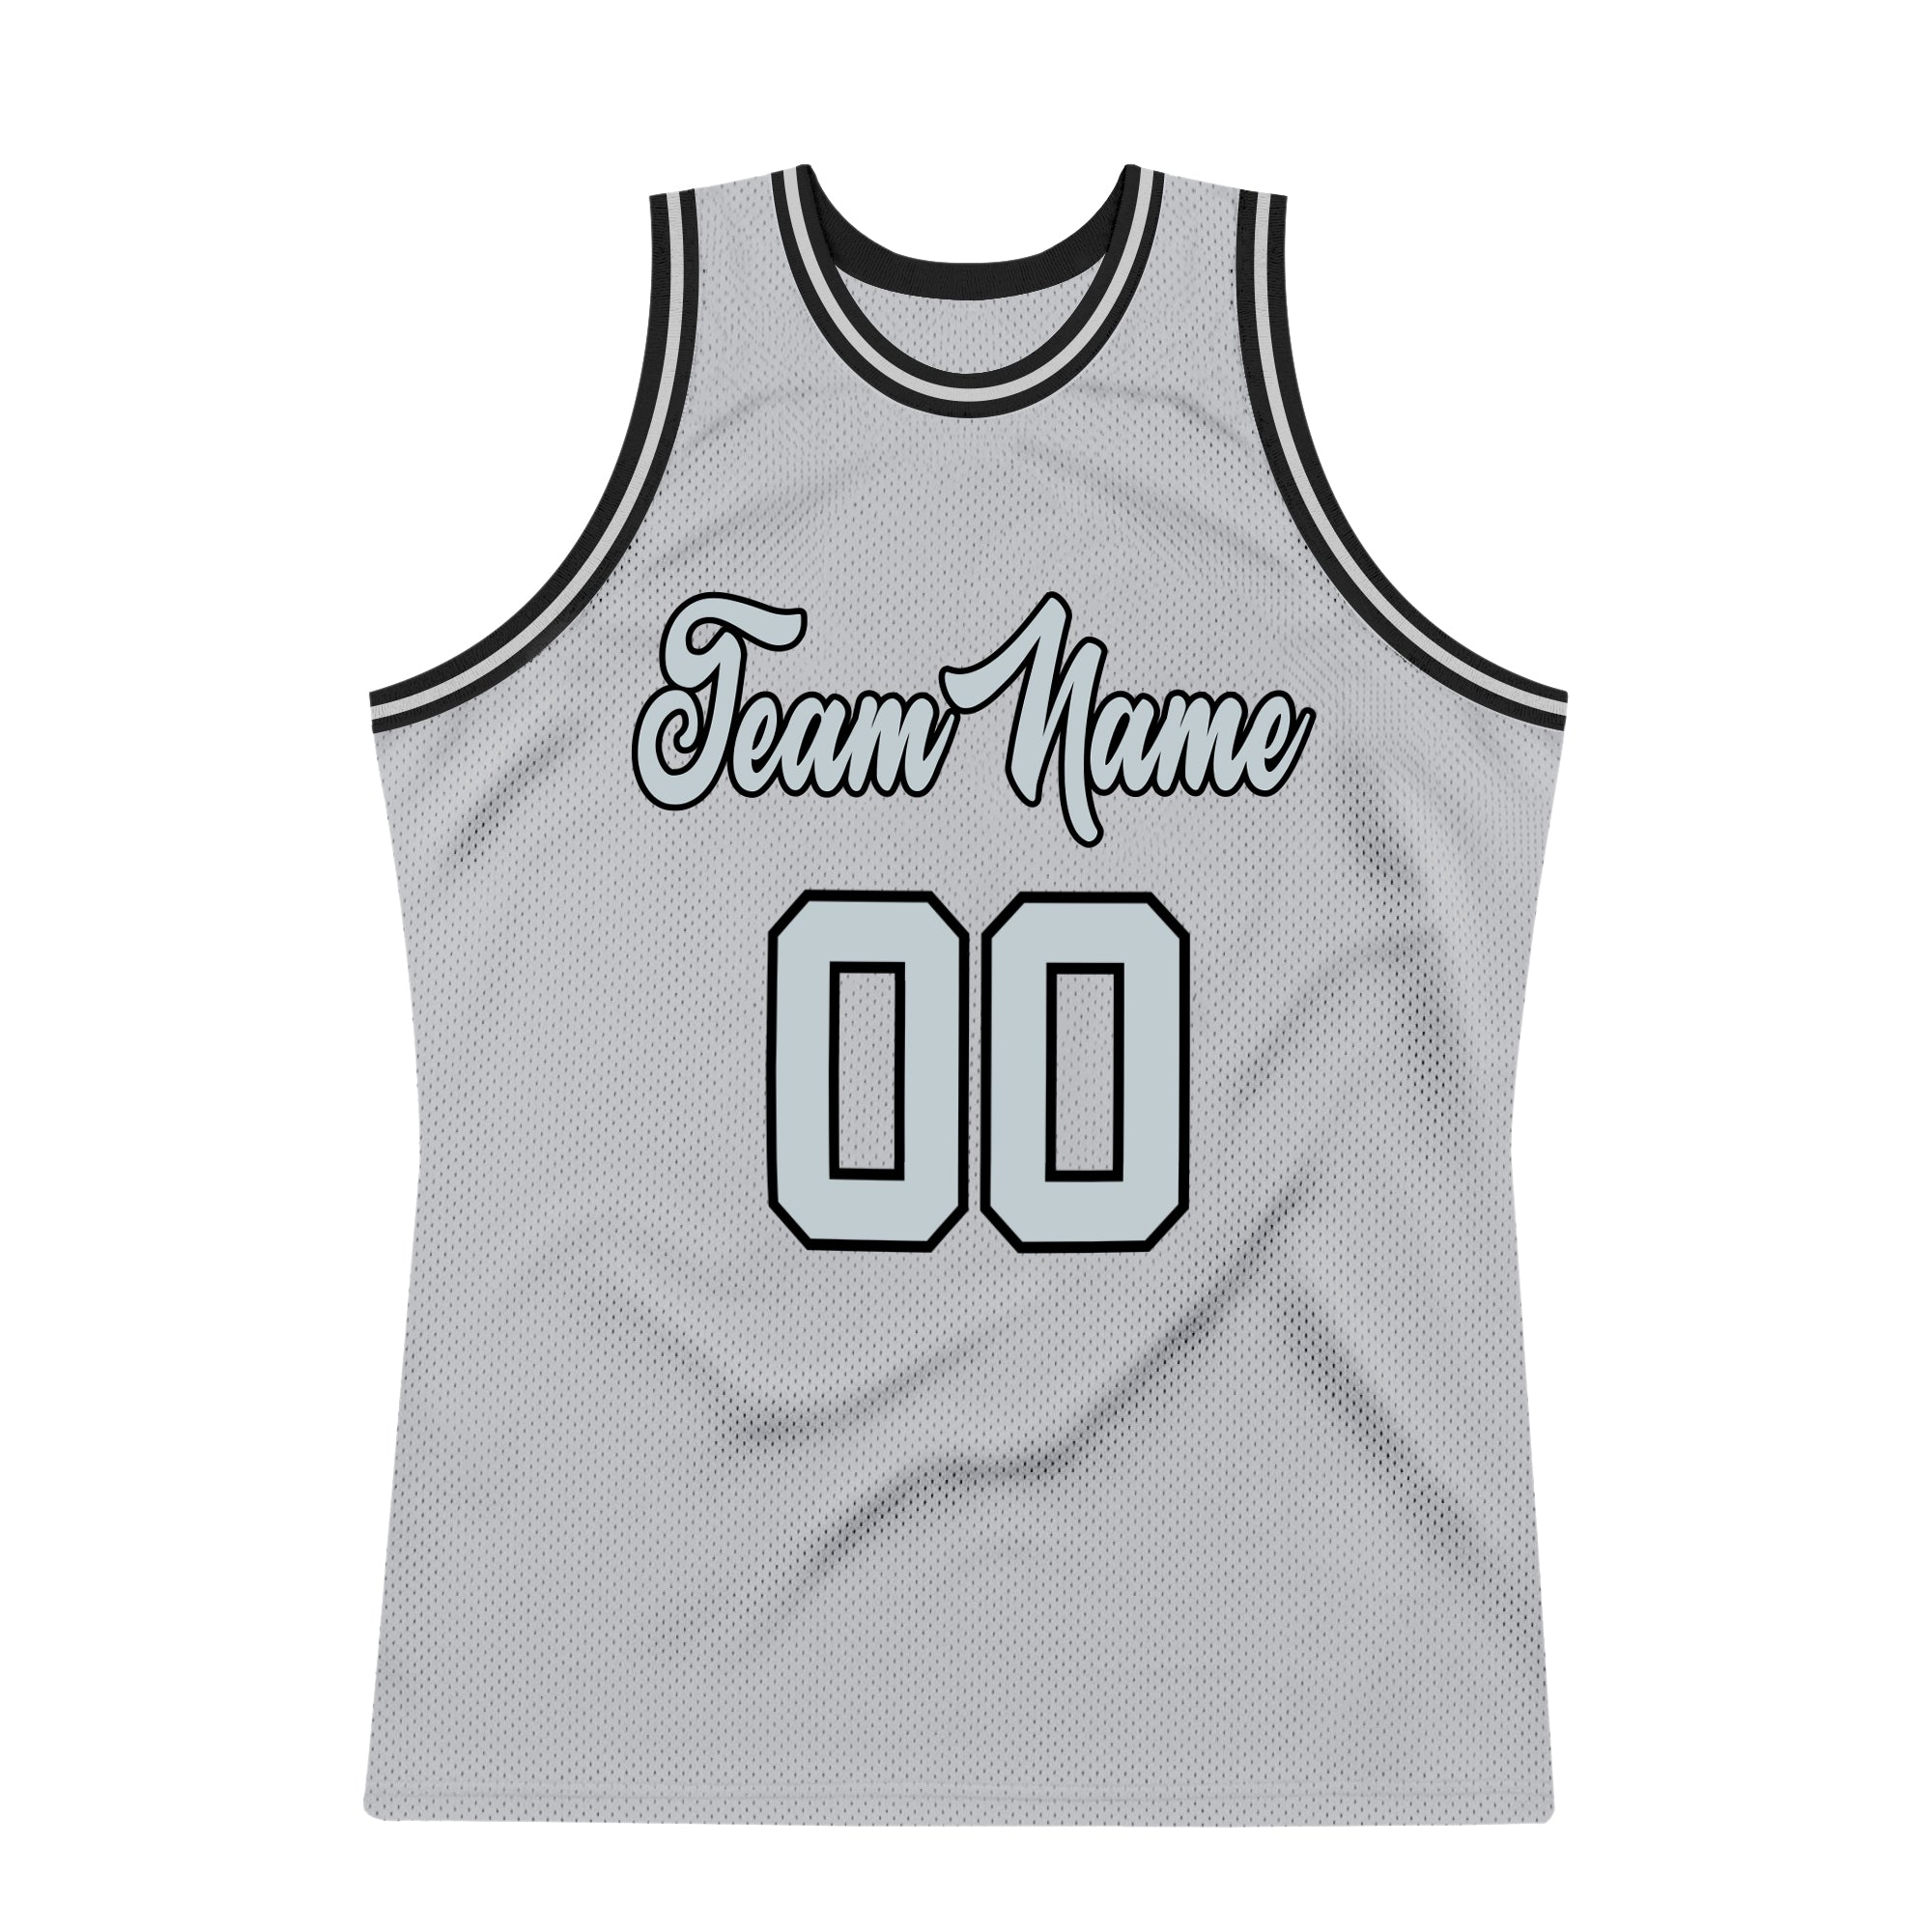 FANSIDEA Custom Black White-Silver Gray Round Neck Rib-Knit Basketball Jersey Youth Size:M